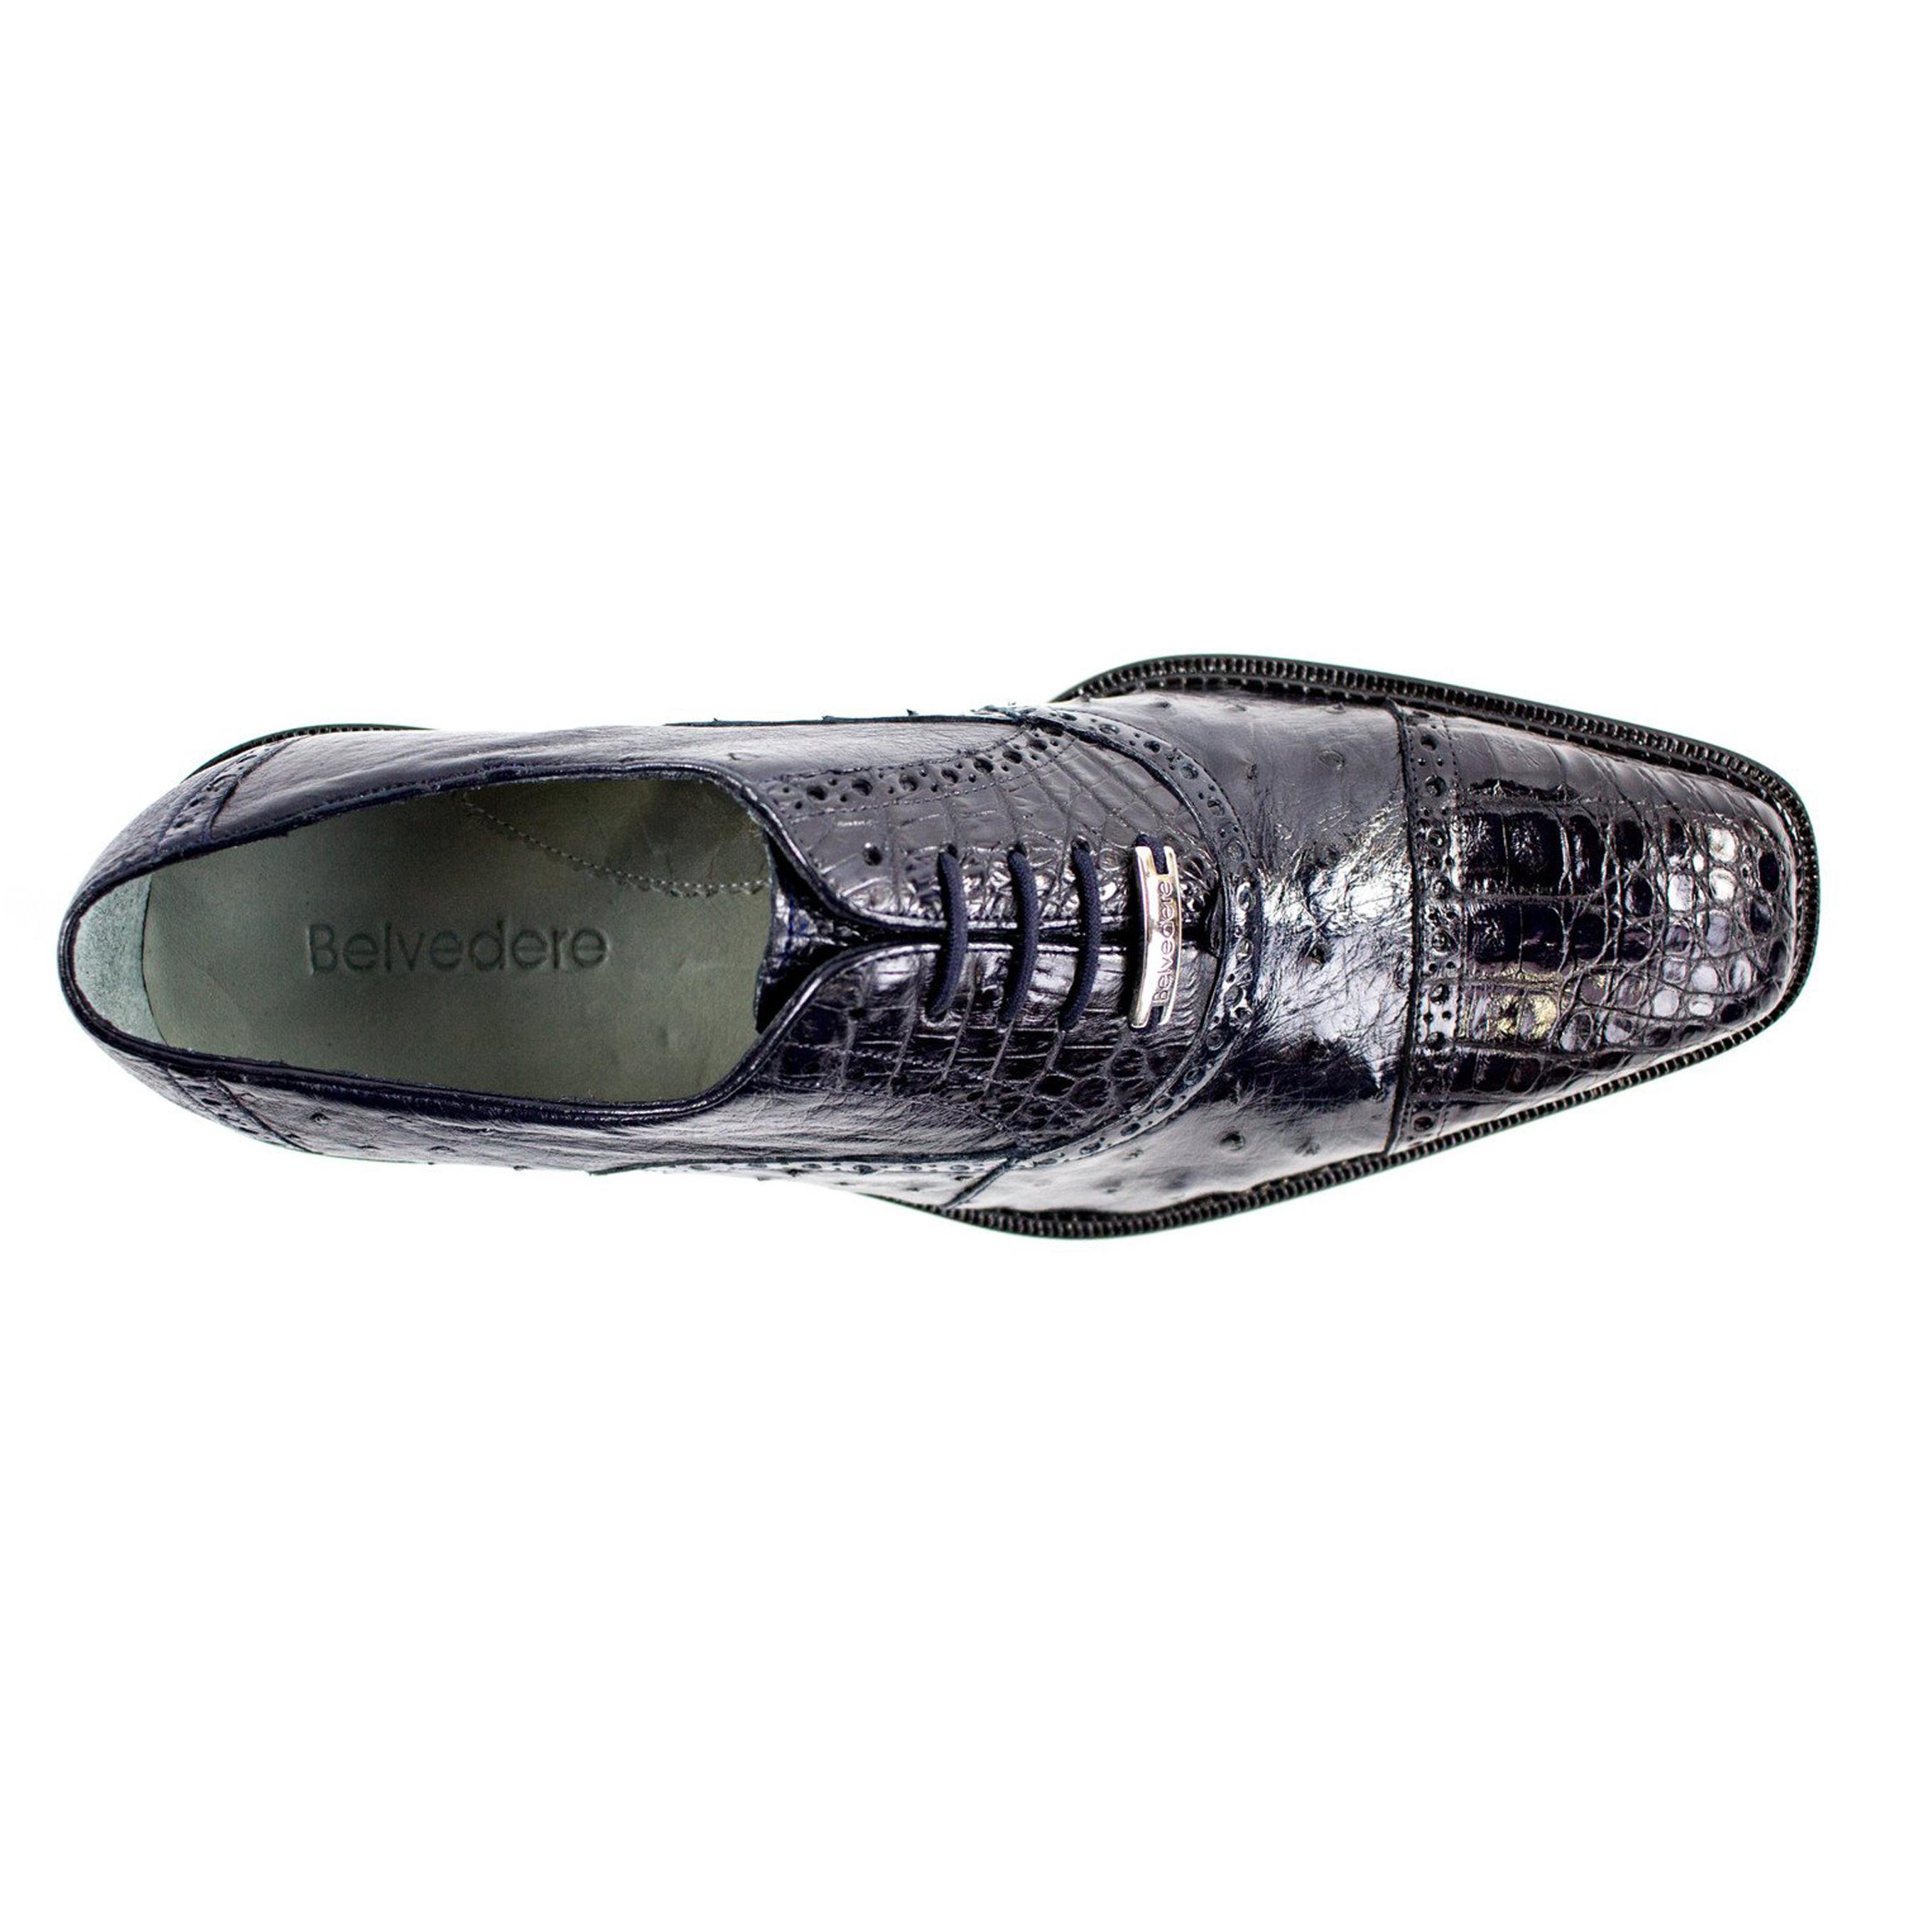 Belvedere Onesto II Navy Blue Ostrich / Crocodile Shoes